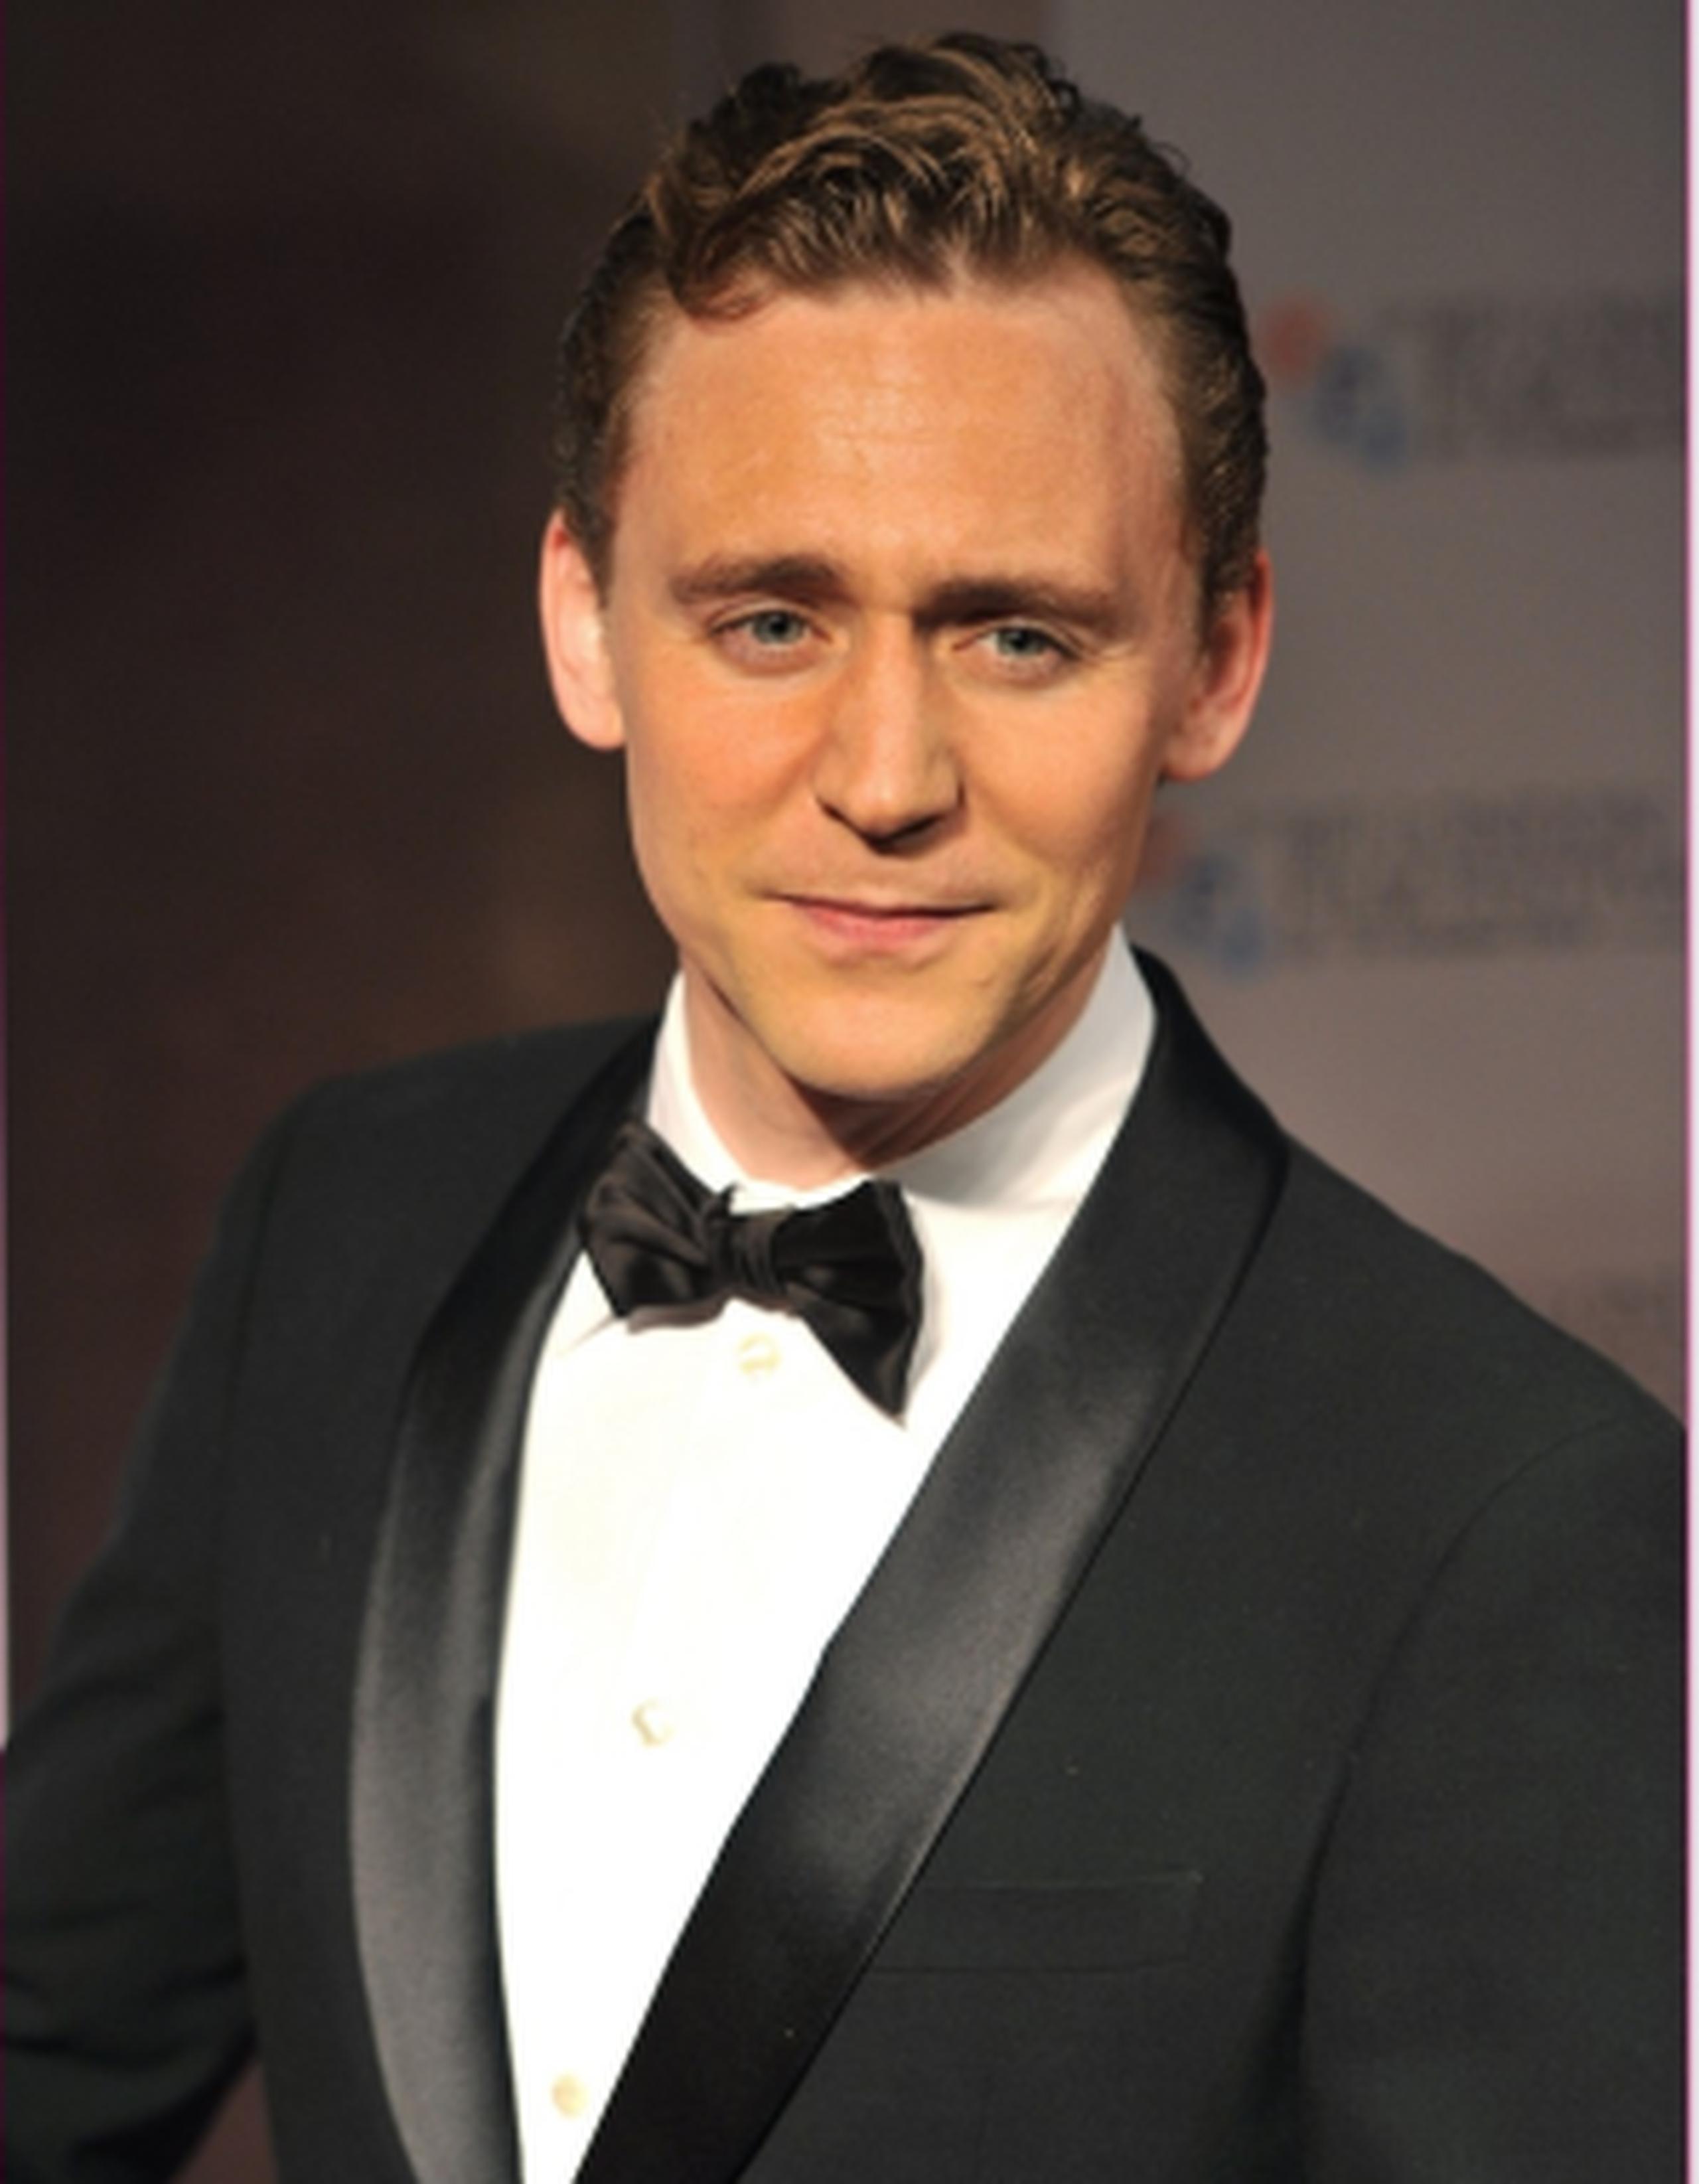 Tom Hiddleston, además de aparecer en cintas como "Thor", "Thor: The Dark World" o "The Avengers", ha trabajado en dramas como "War Horse" y comedias como "Midnight in Paris". (Archivo/Daniel Deme/WENN)